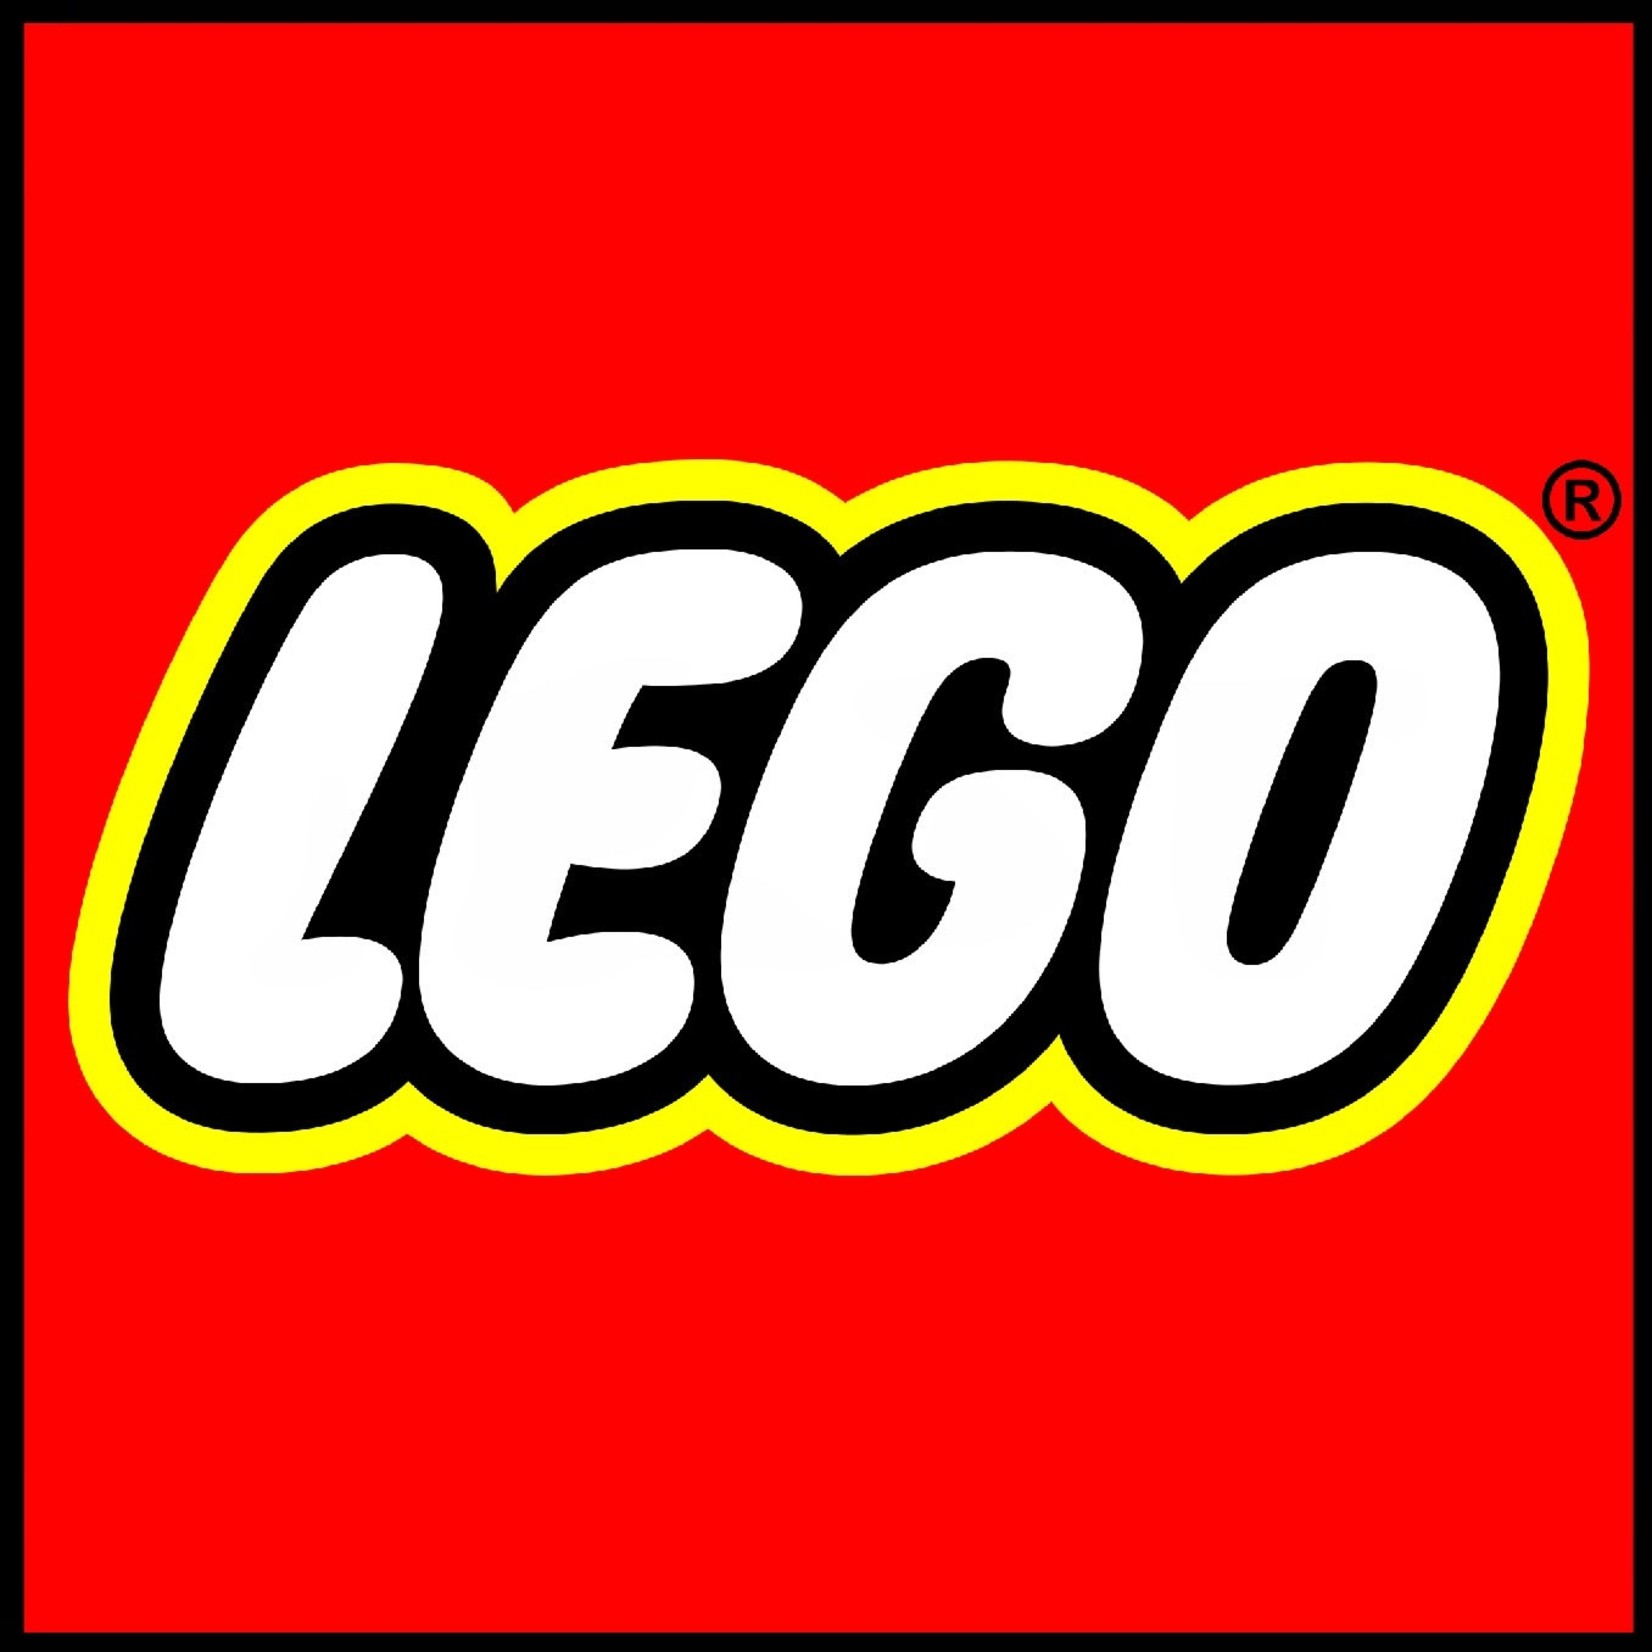 Lego City Wildlife Rescue Hovercraft - 35 Pcs.